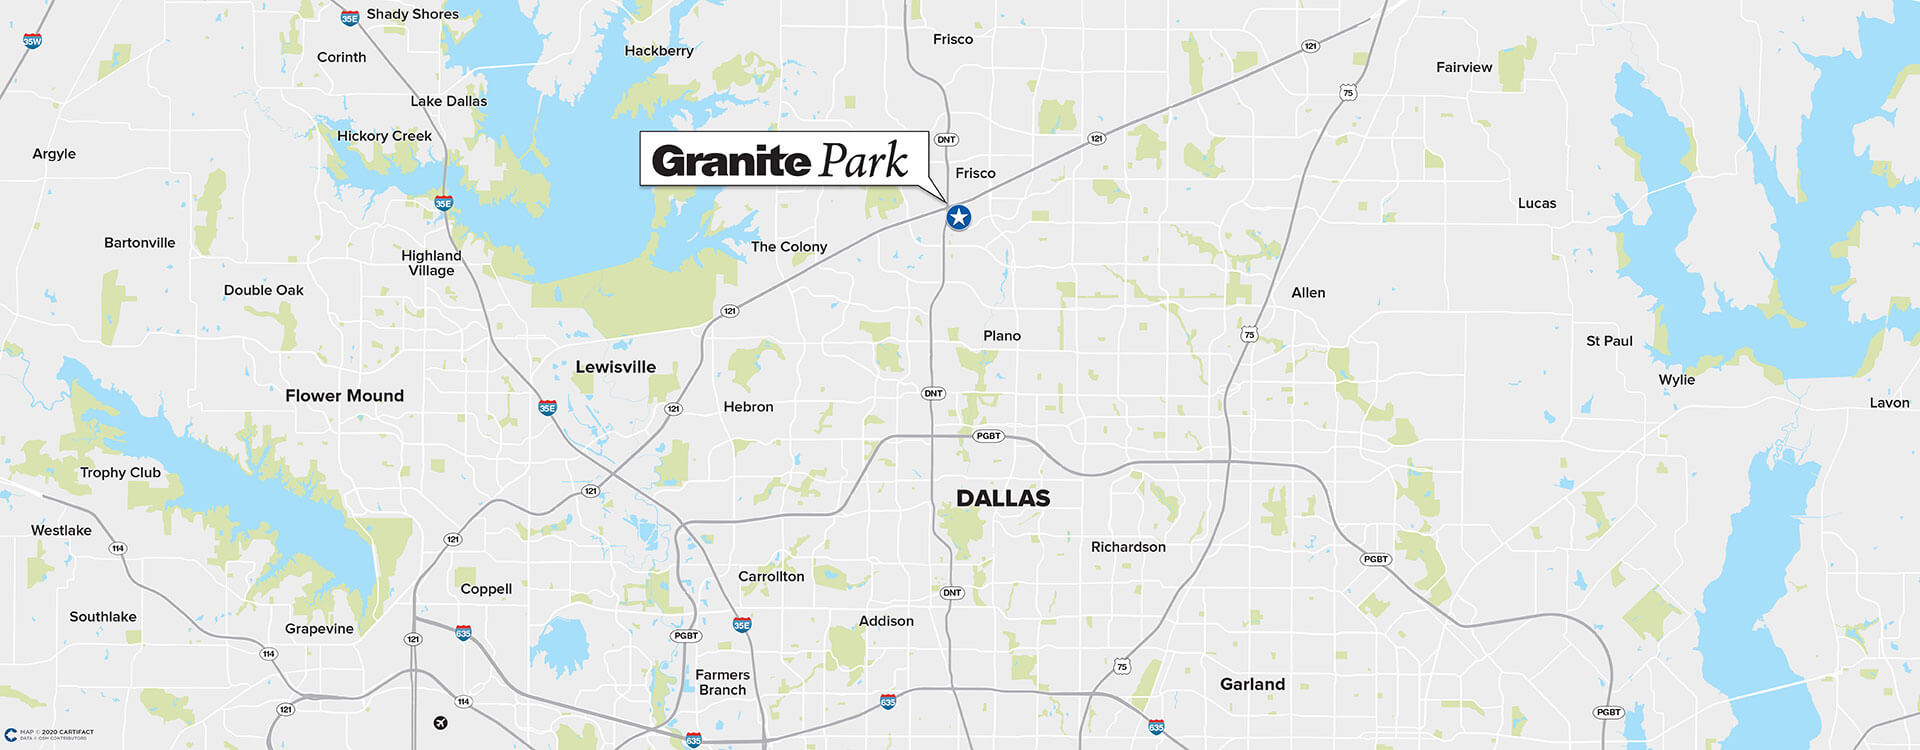 Shops at Granite Park Three location map